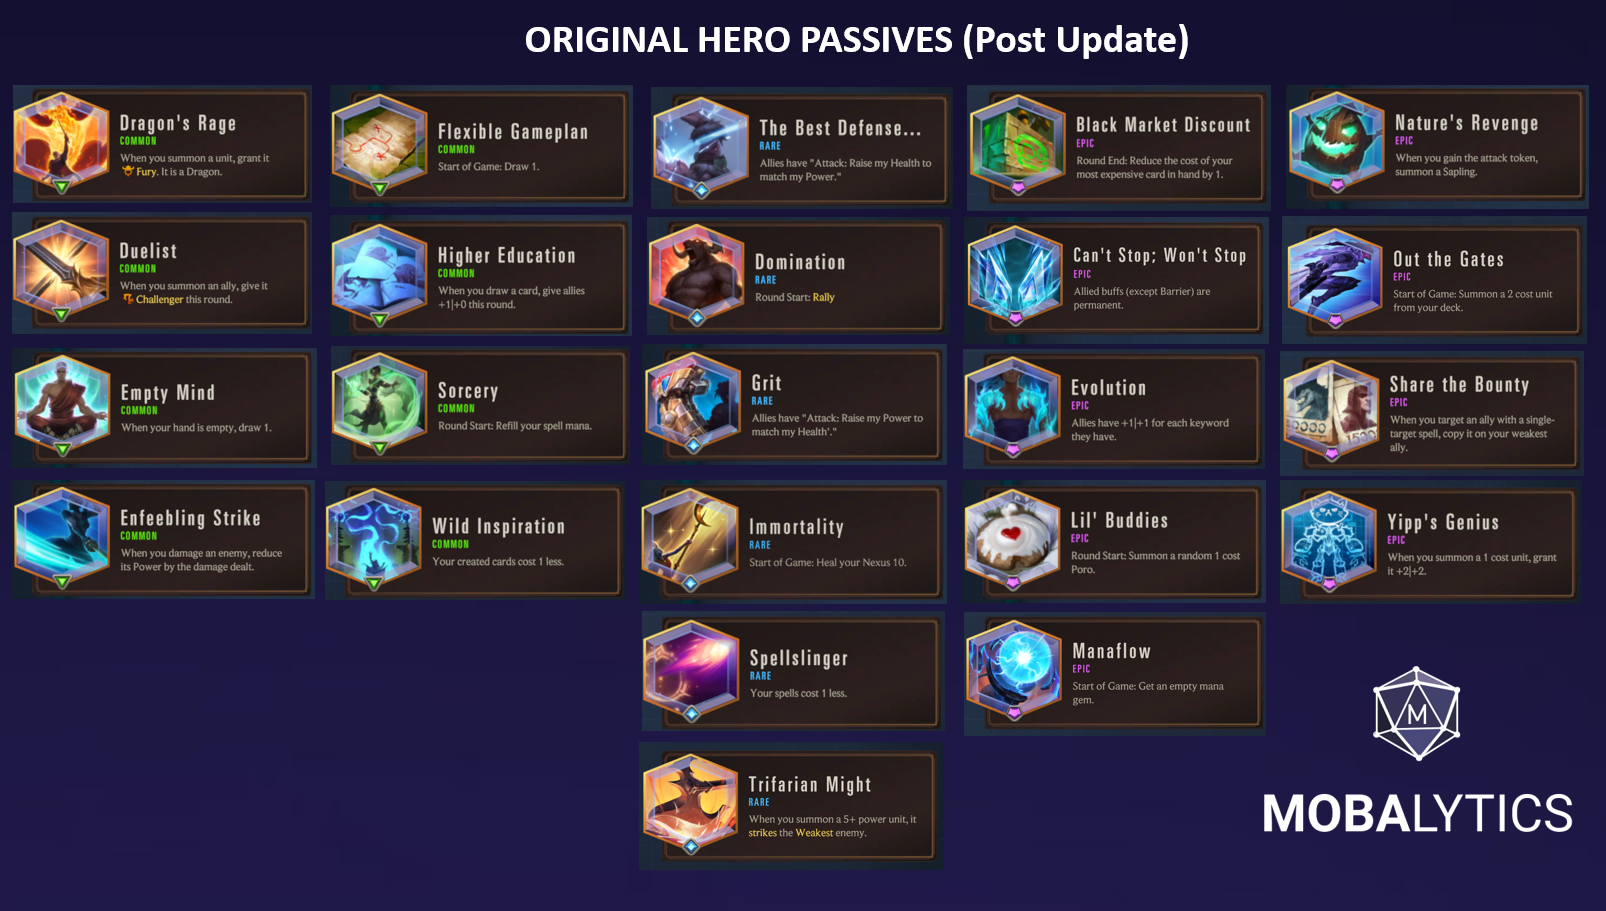 Original Hero Passives Post Update (Lab of Legends)